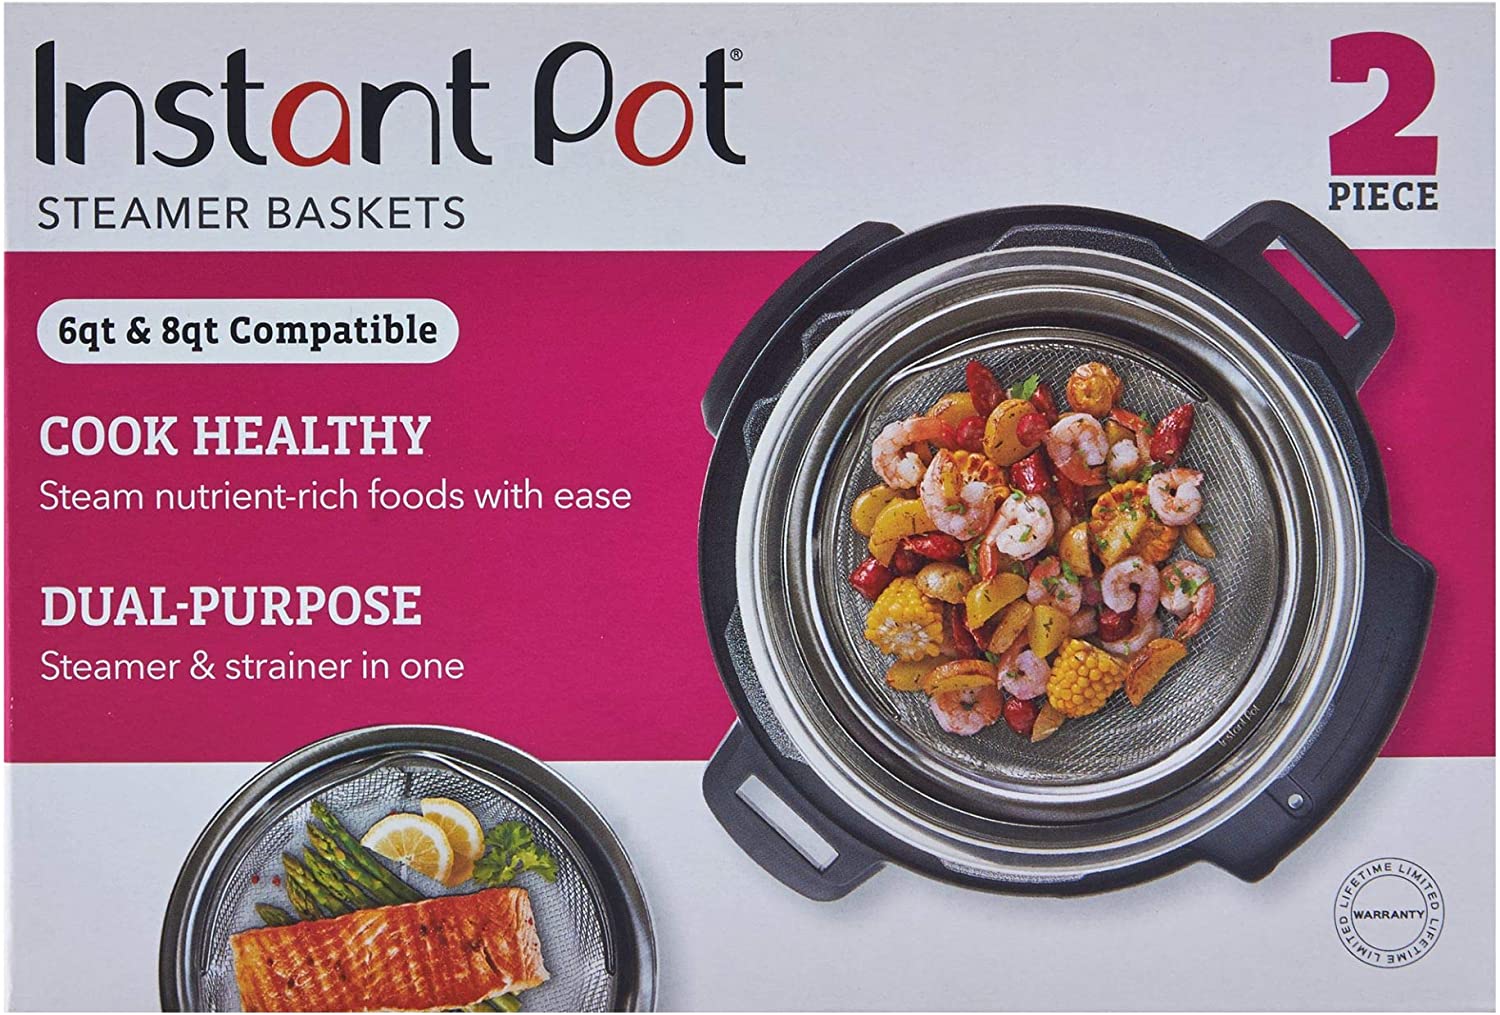 NEW Instant Pot 2-Piece Steamer Basket, 6 Qt & 8 Qt, Steamer Baskets ONLY